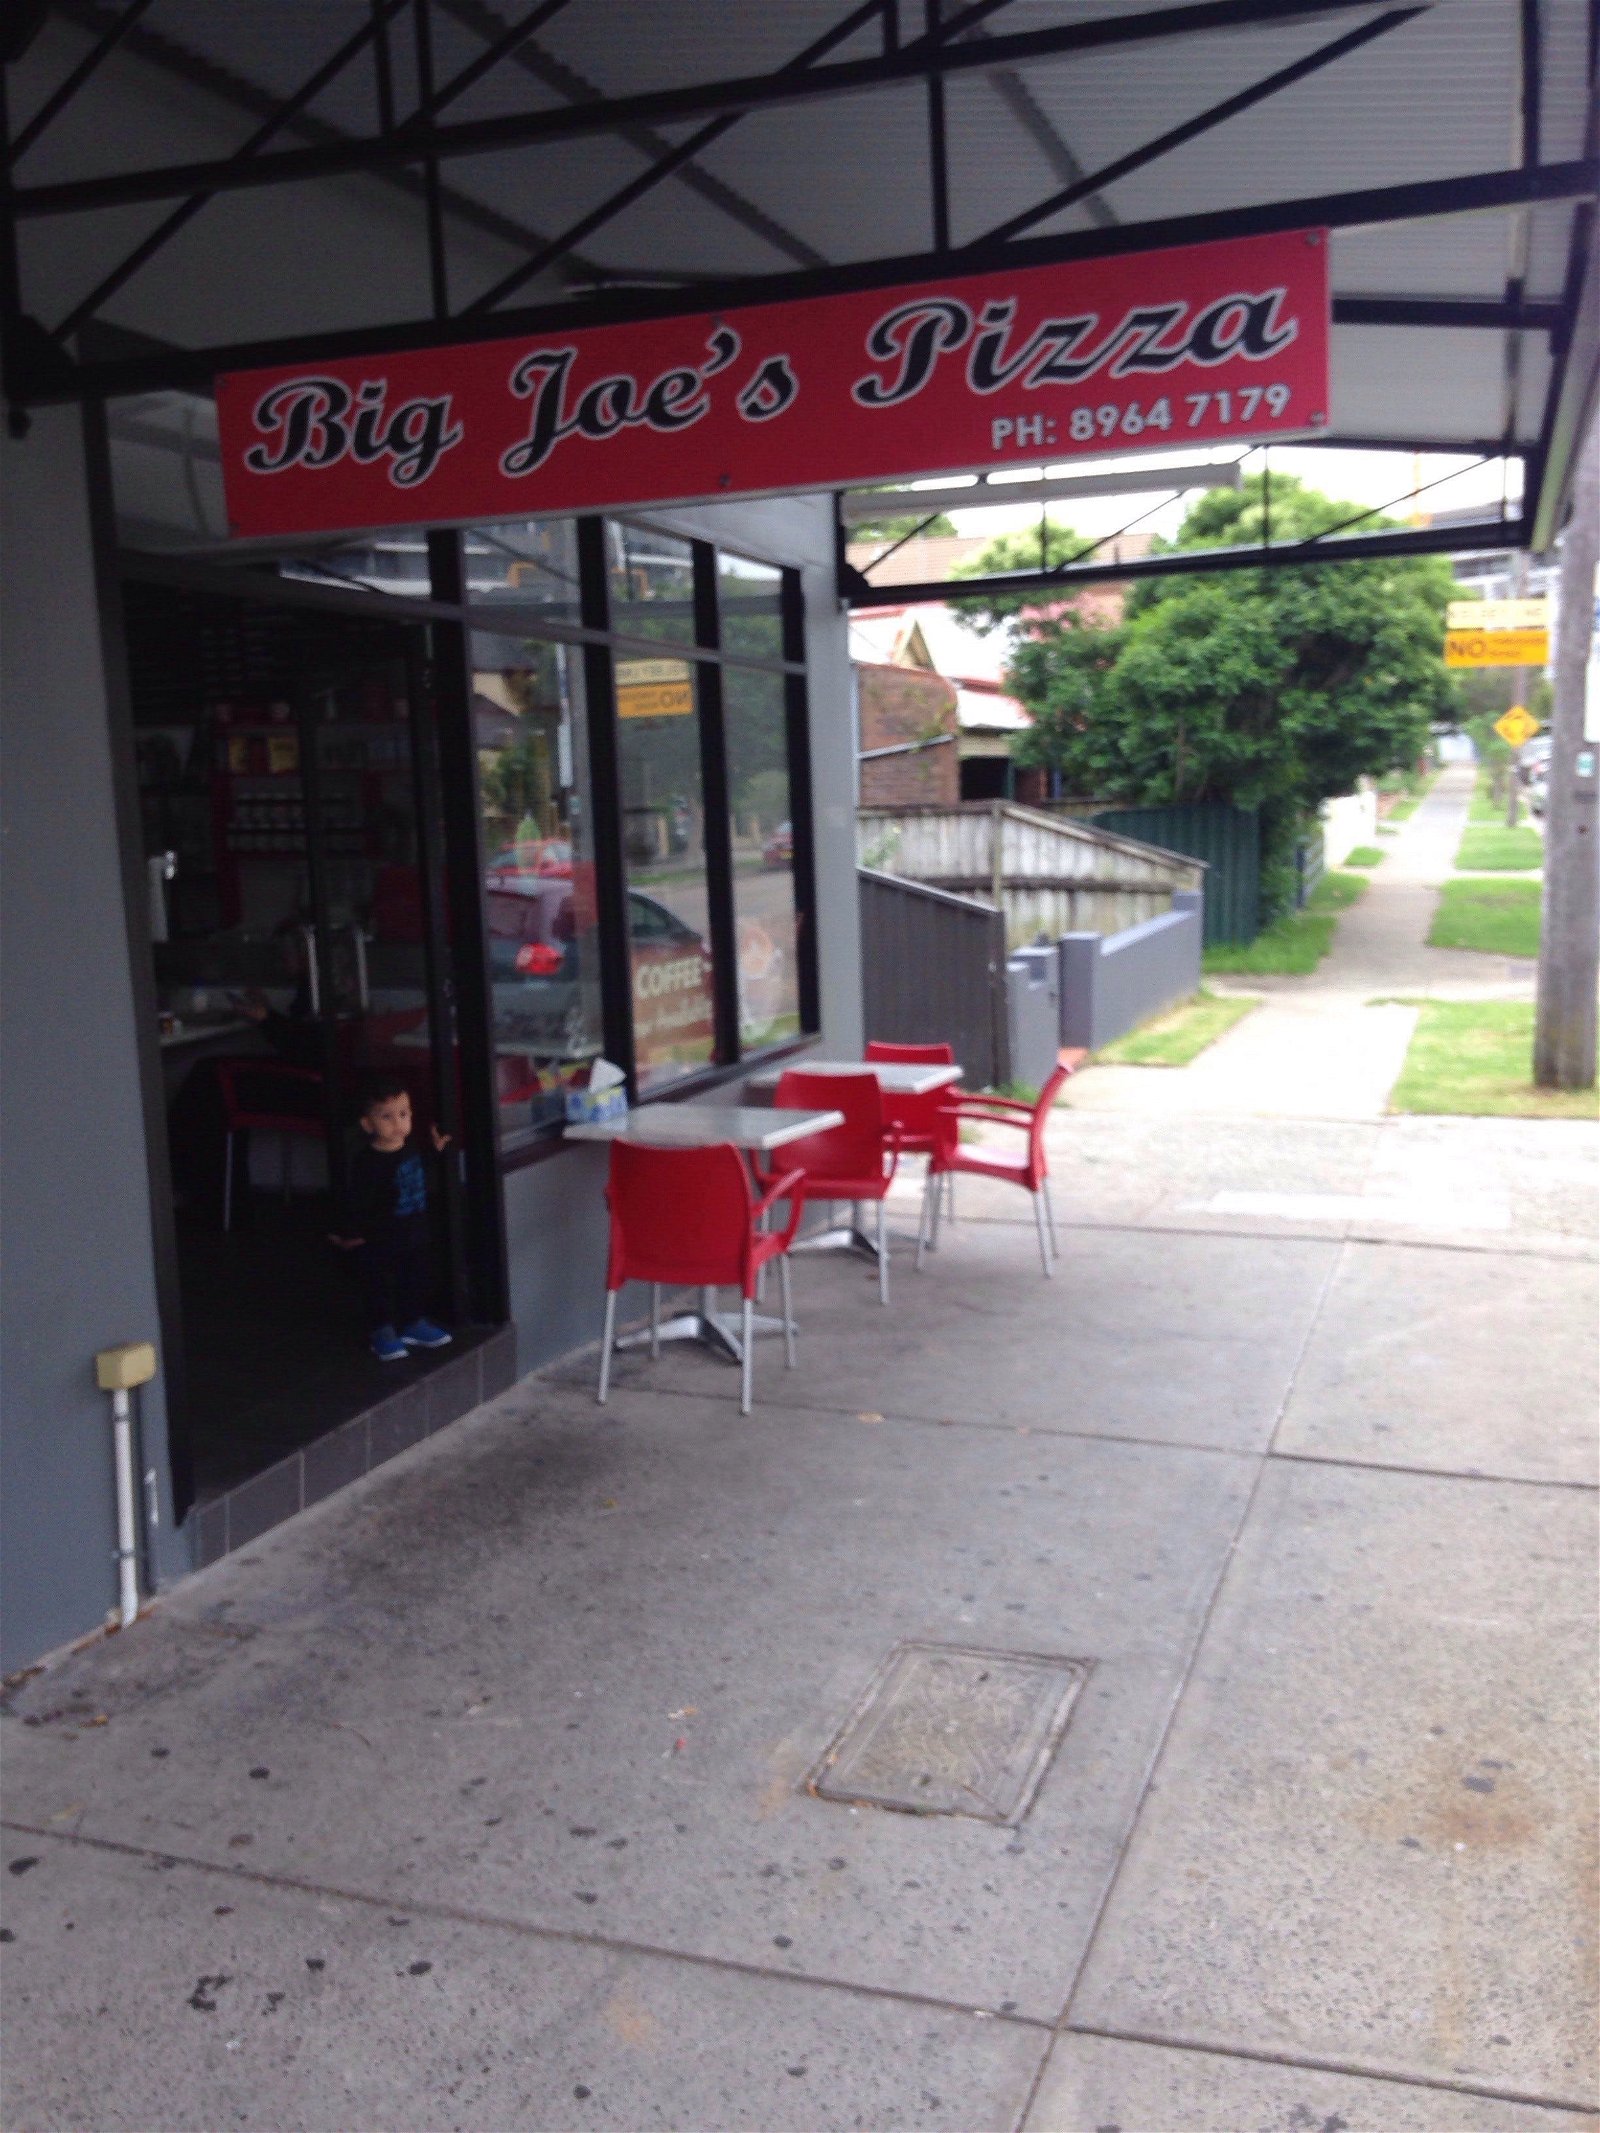 Big Joe's Pizza - Australia Accommodation